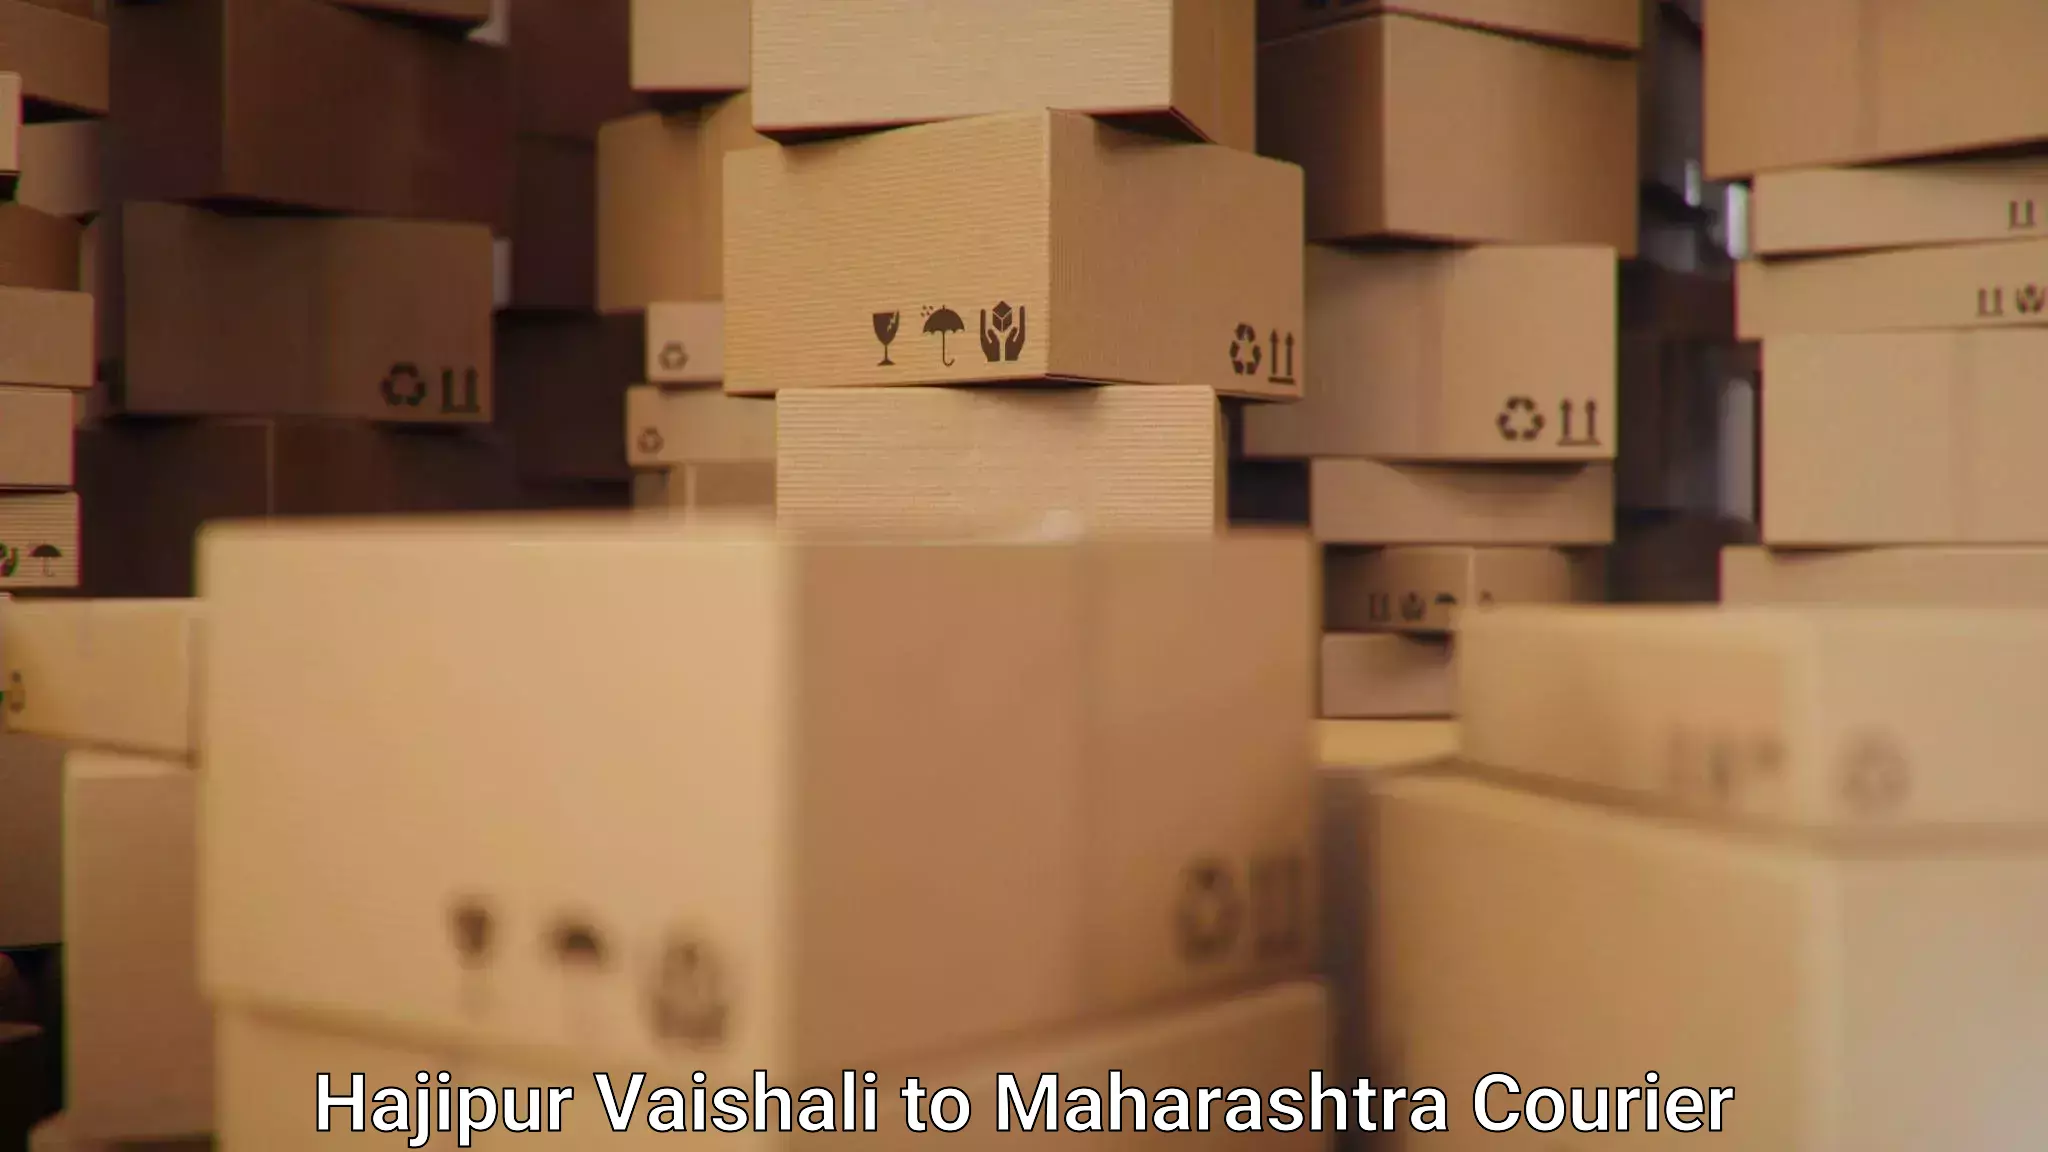 Courier service booking Hajipur Vaishali to Sangameshwar